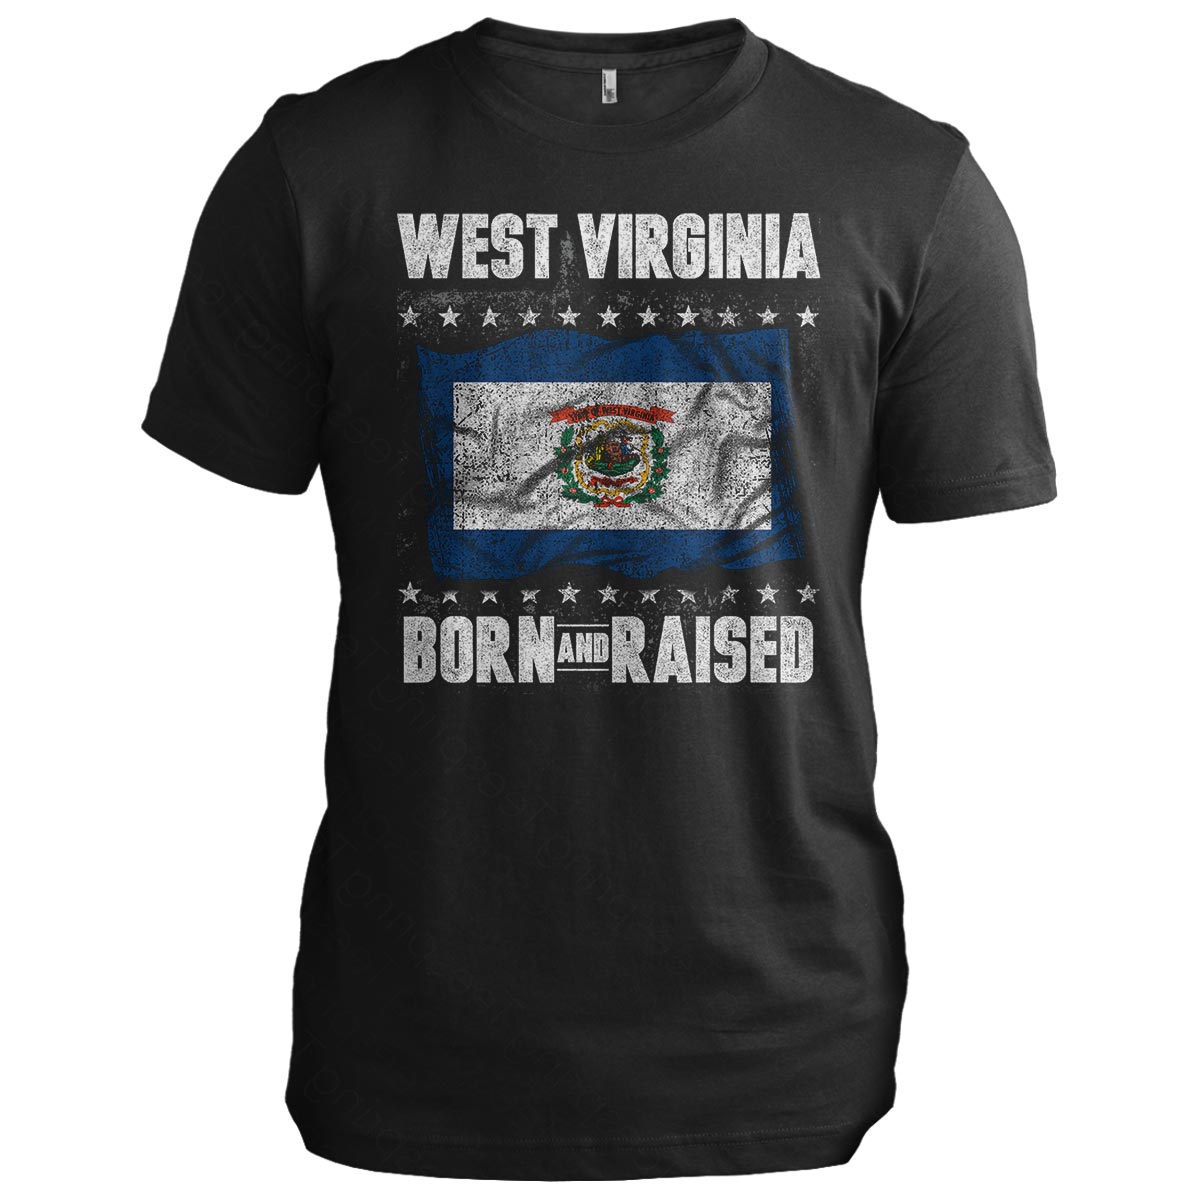 West Virginia: Born and Raised